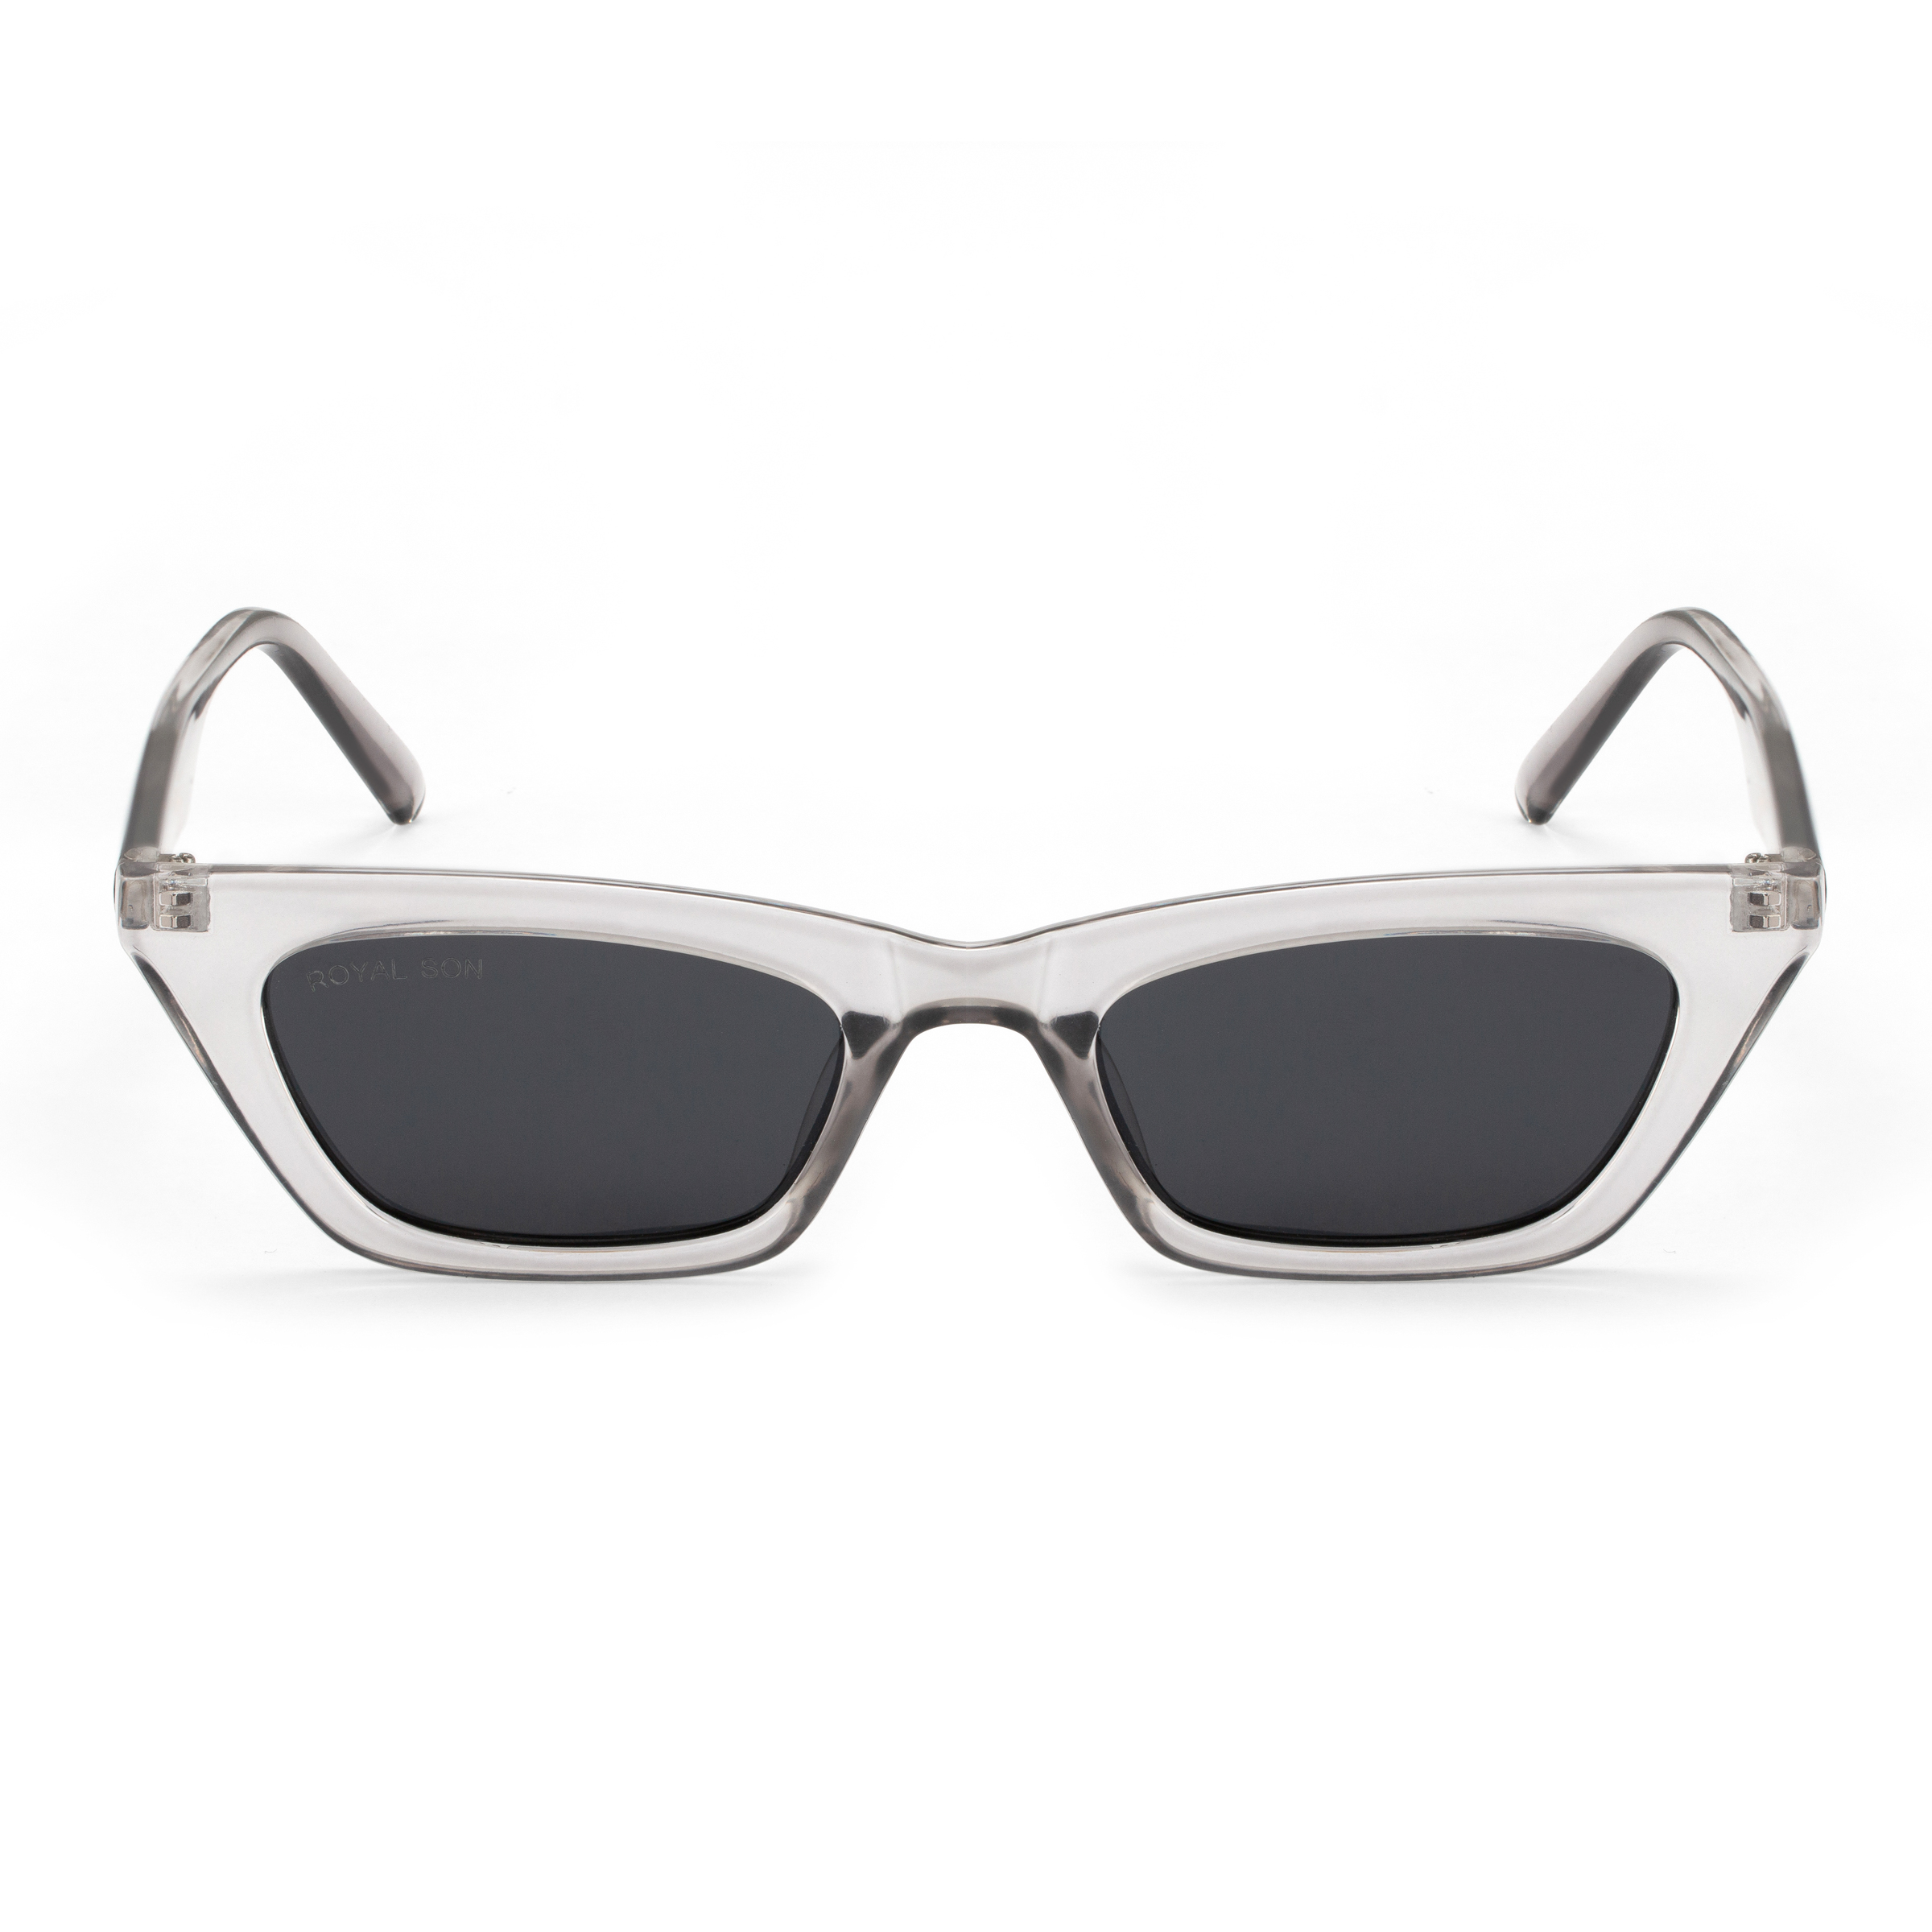 Leeway Retro Square Women Sunglasses | LW-1266 | Black Lens with White  Frame | Stylish